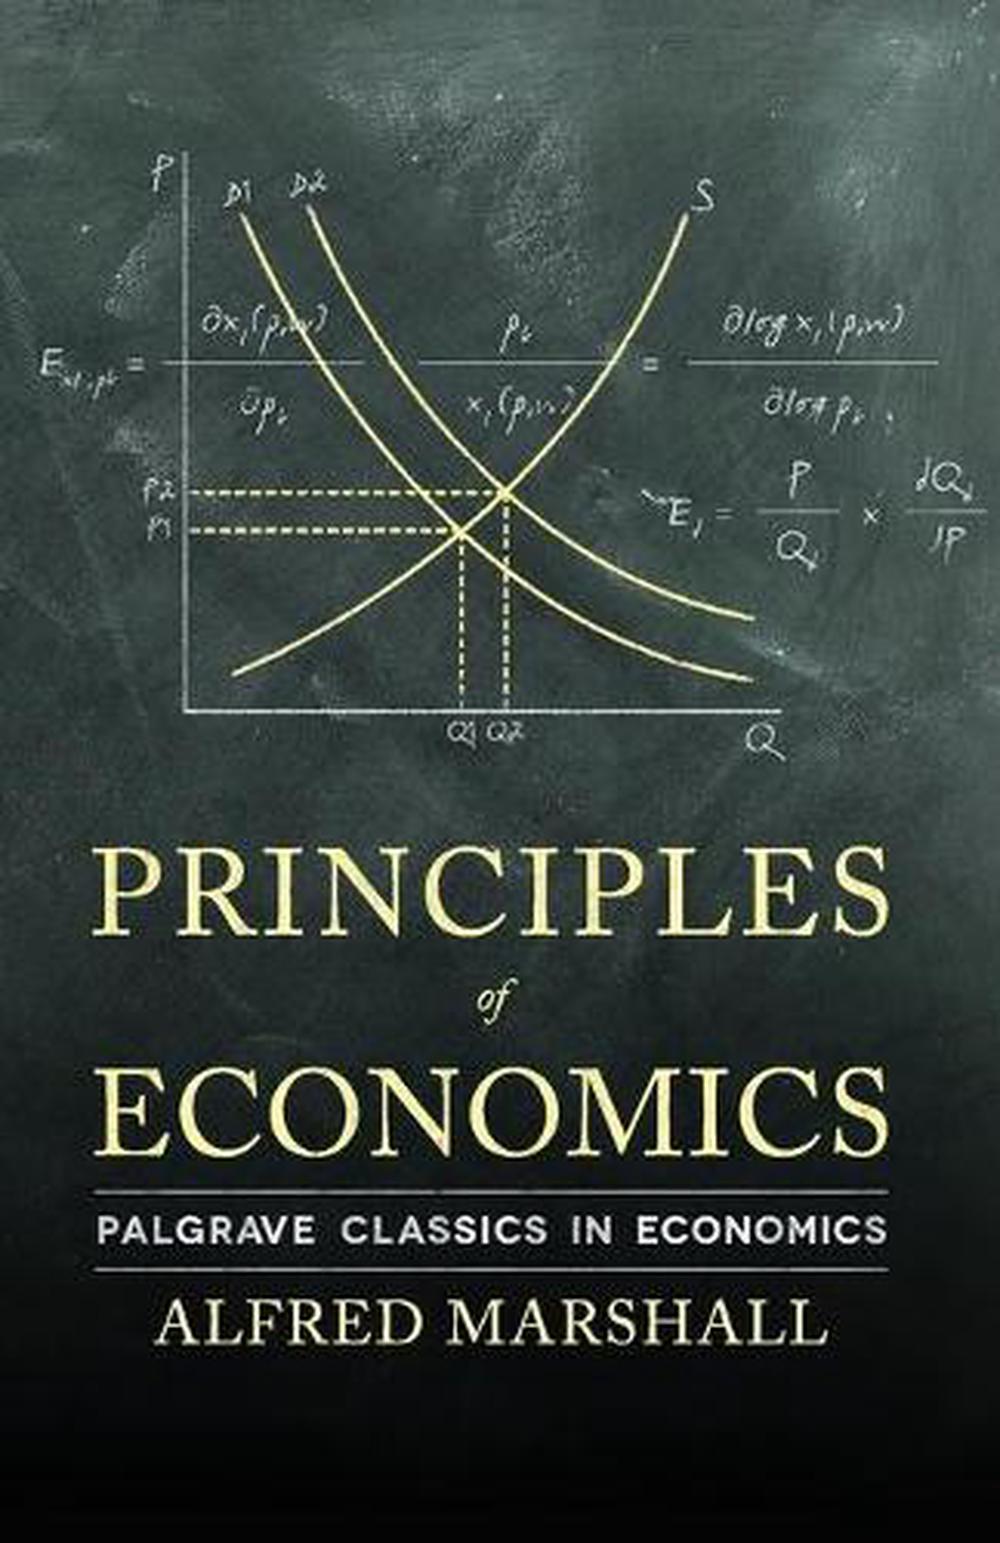 phd economics books